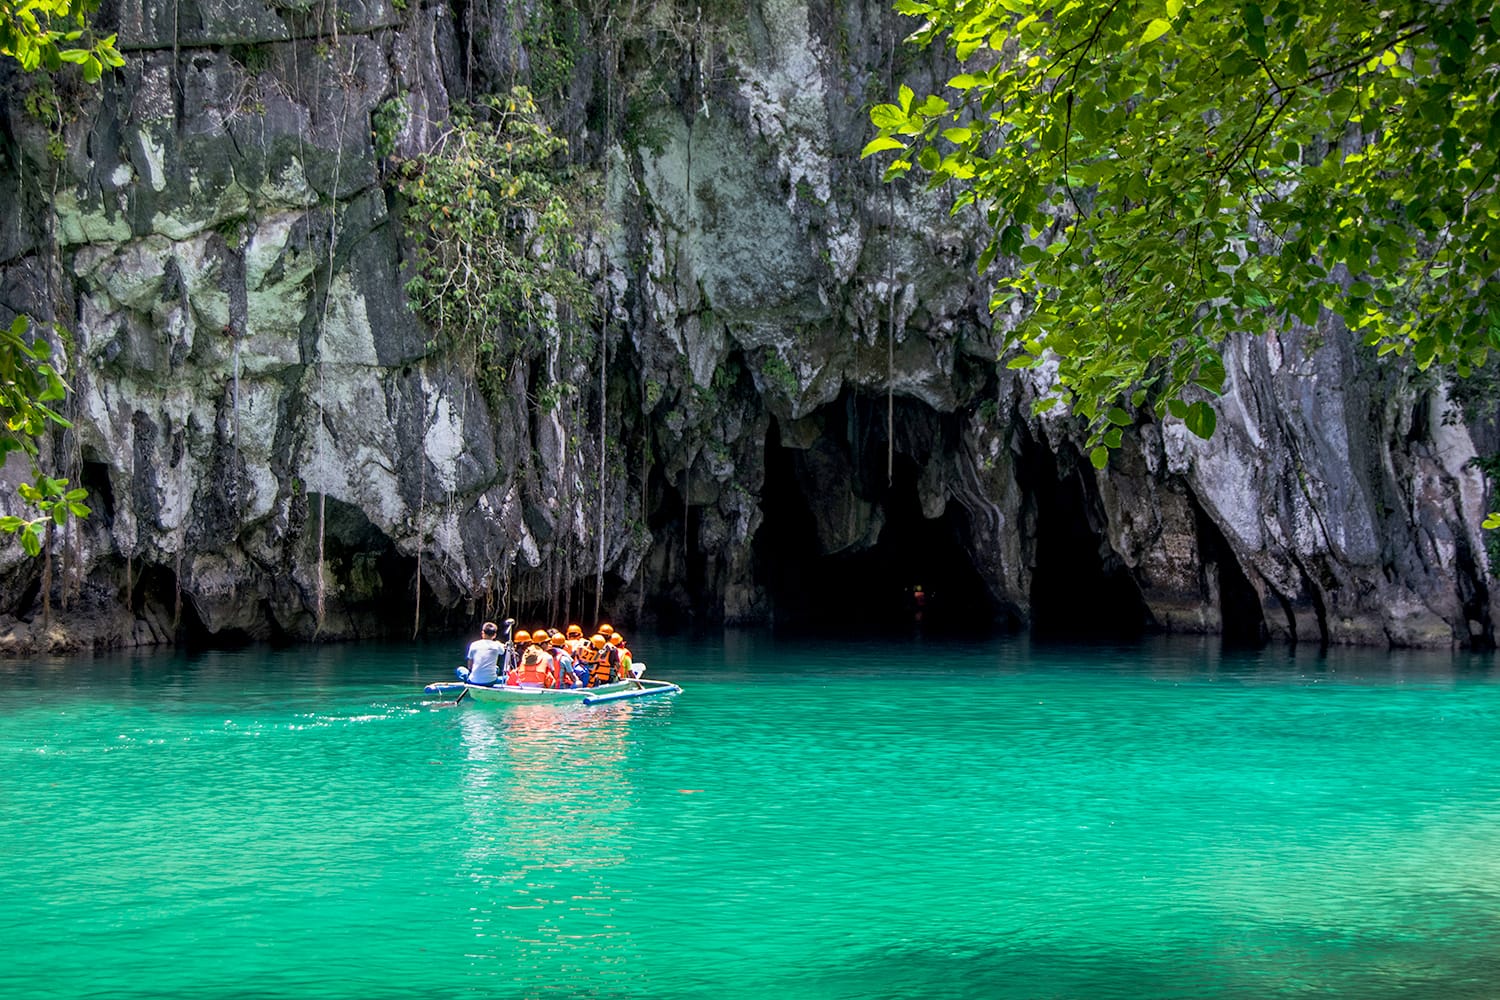 Puerto Princesa Subterranean River National Park in Palawan, Philippines